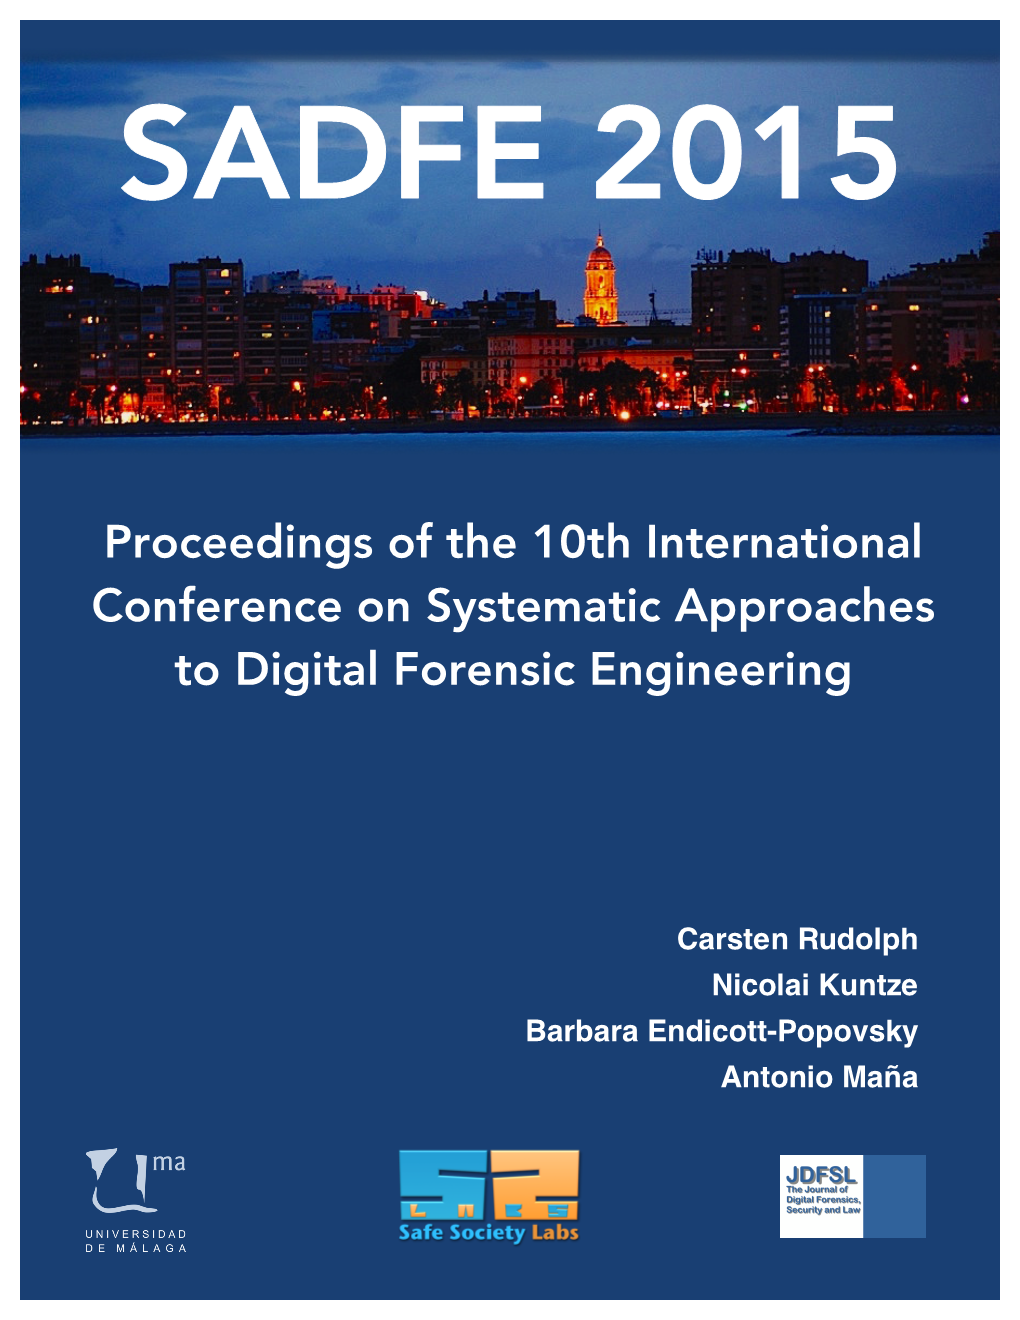 SADFE-2015-Proceedings.Pdf